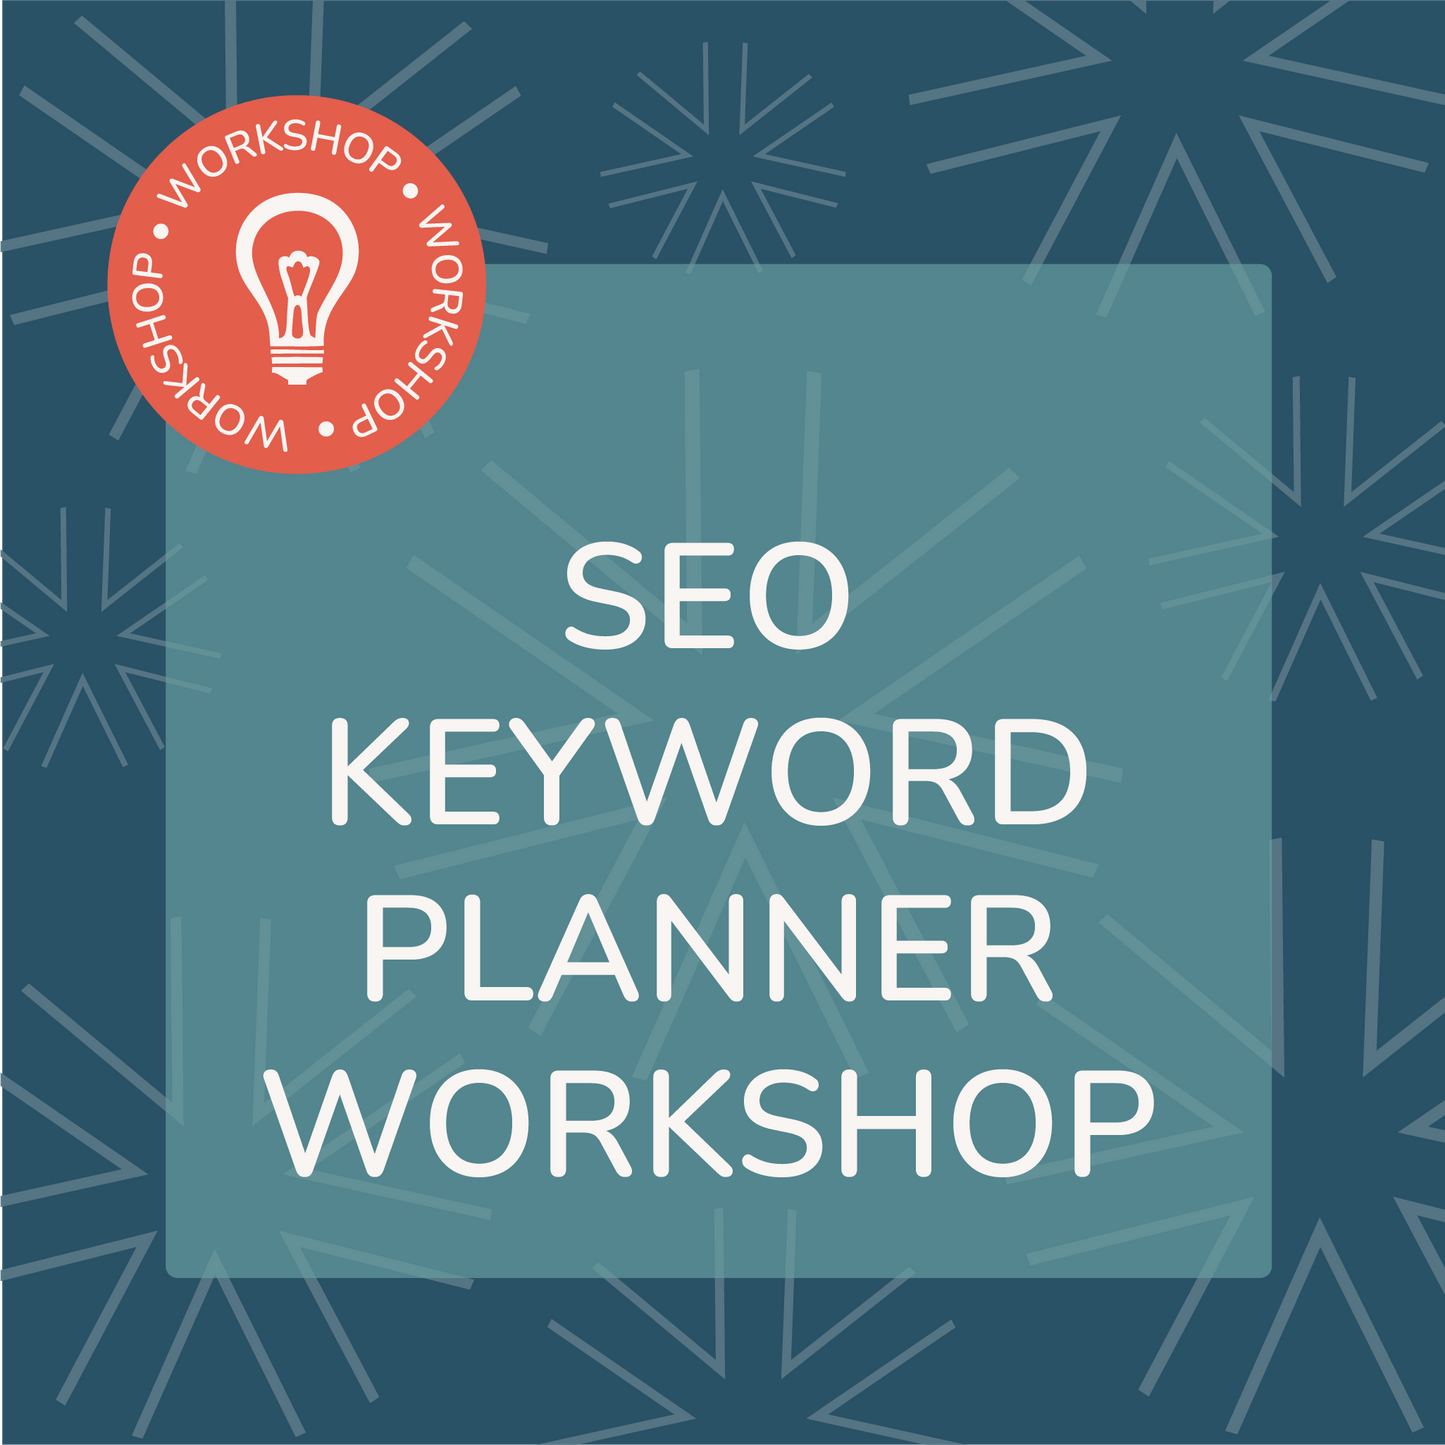 SEO Keyword Planner Workshop